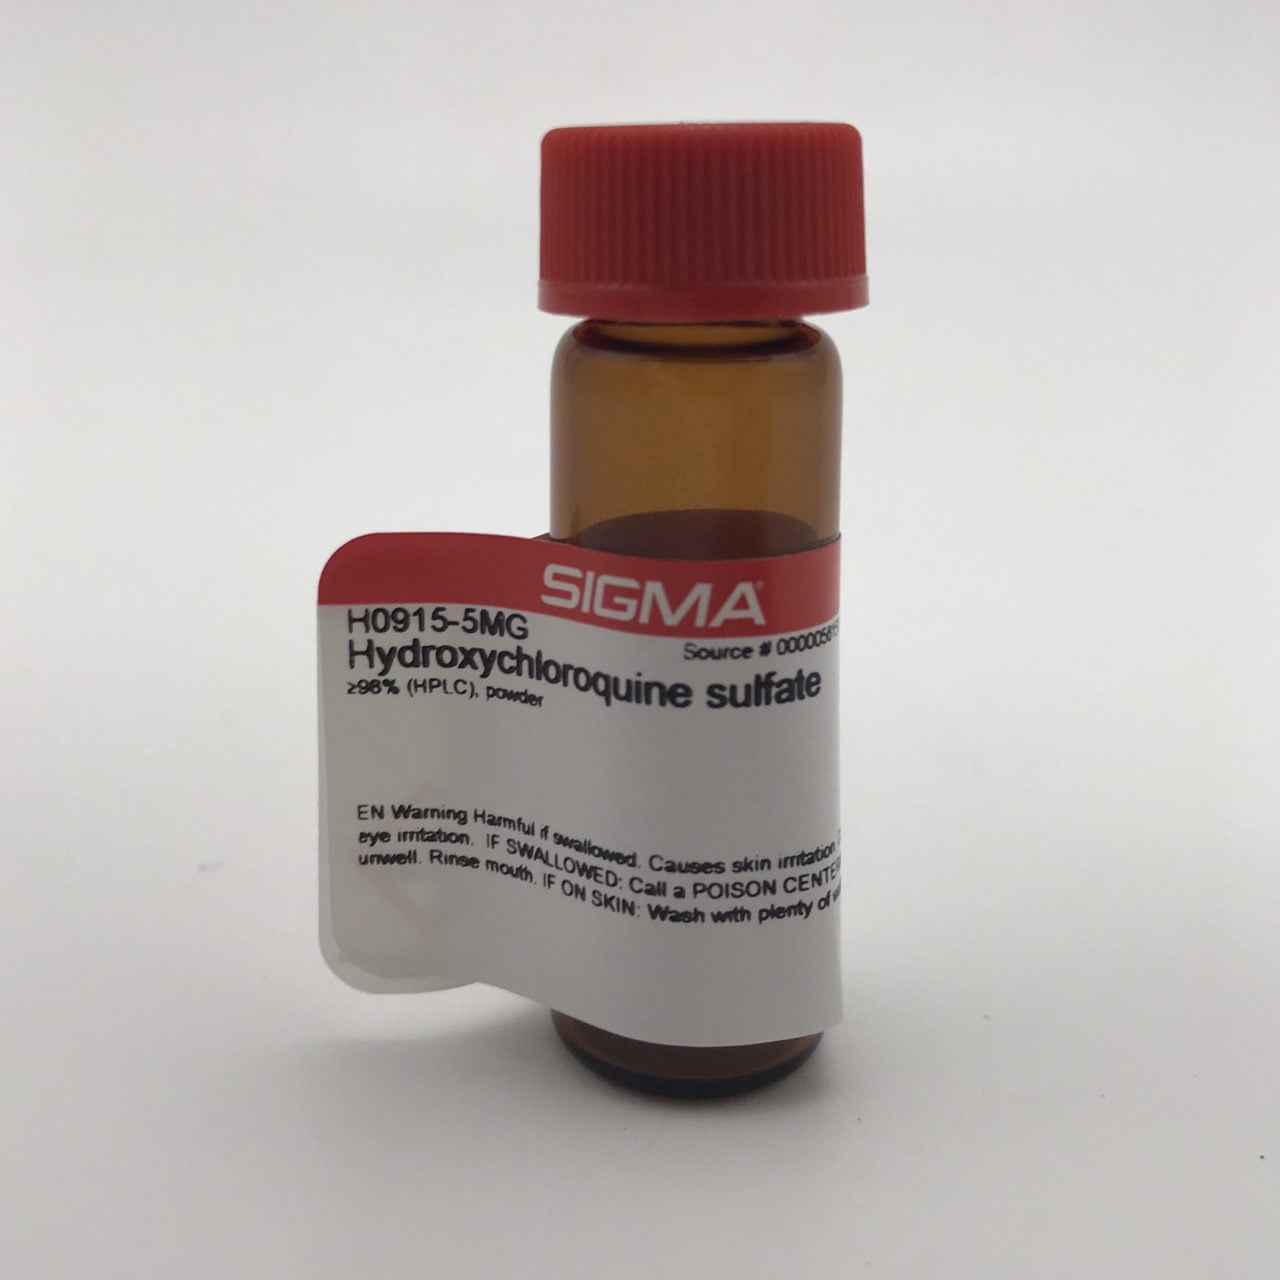 Hydroxychloroquine Sulfate ≥98% (HPLC)